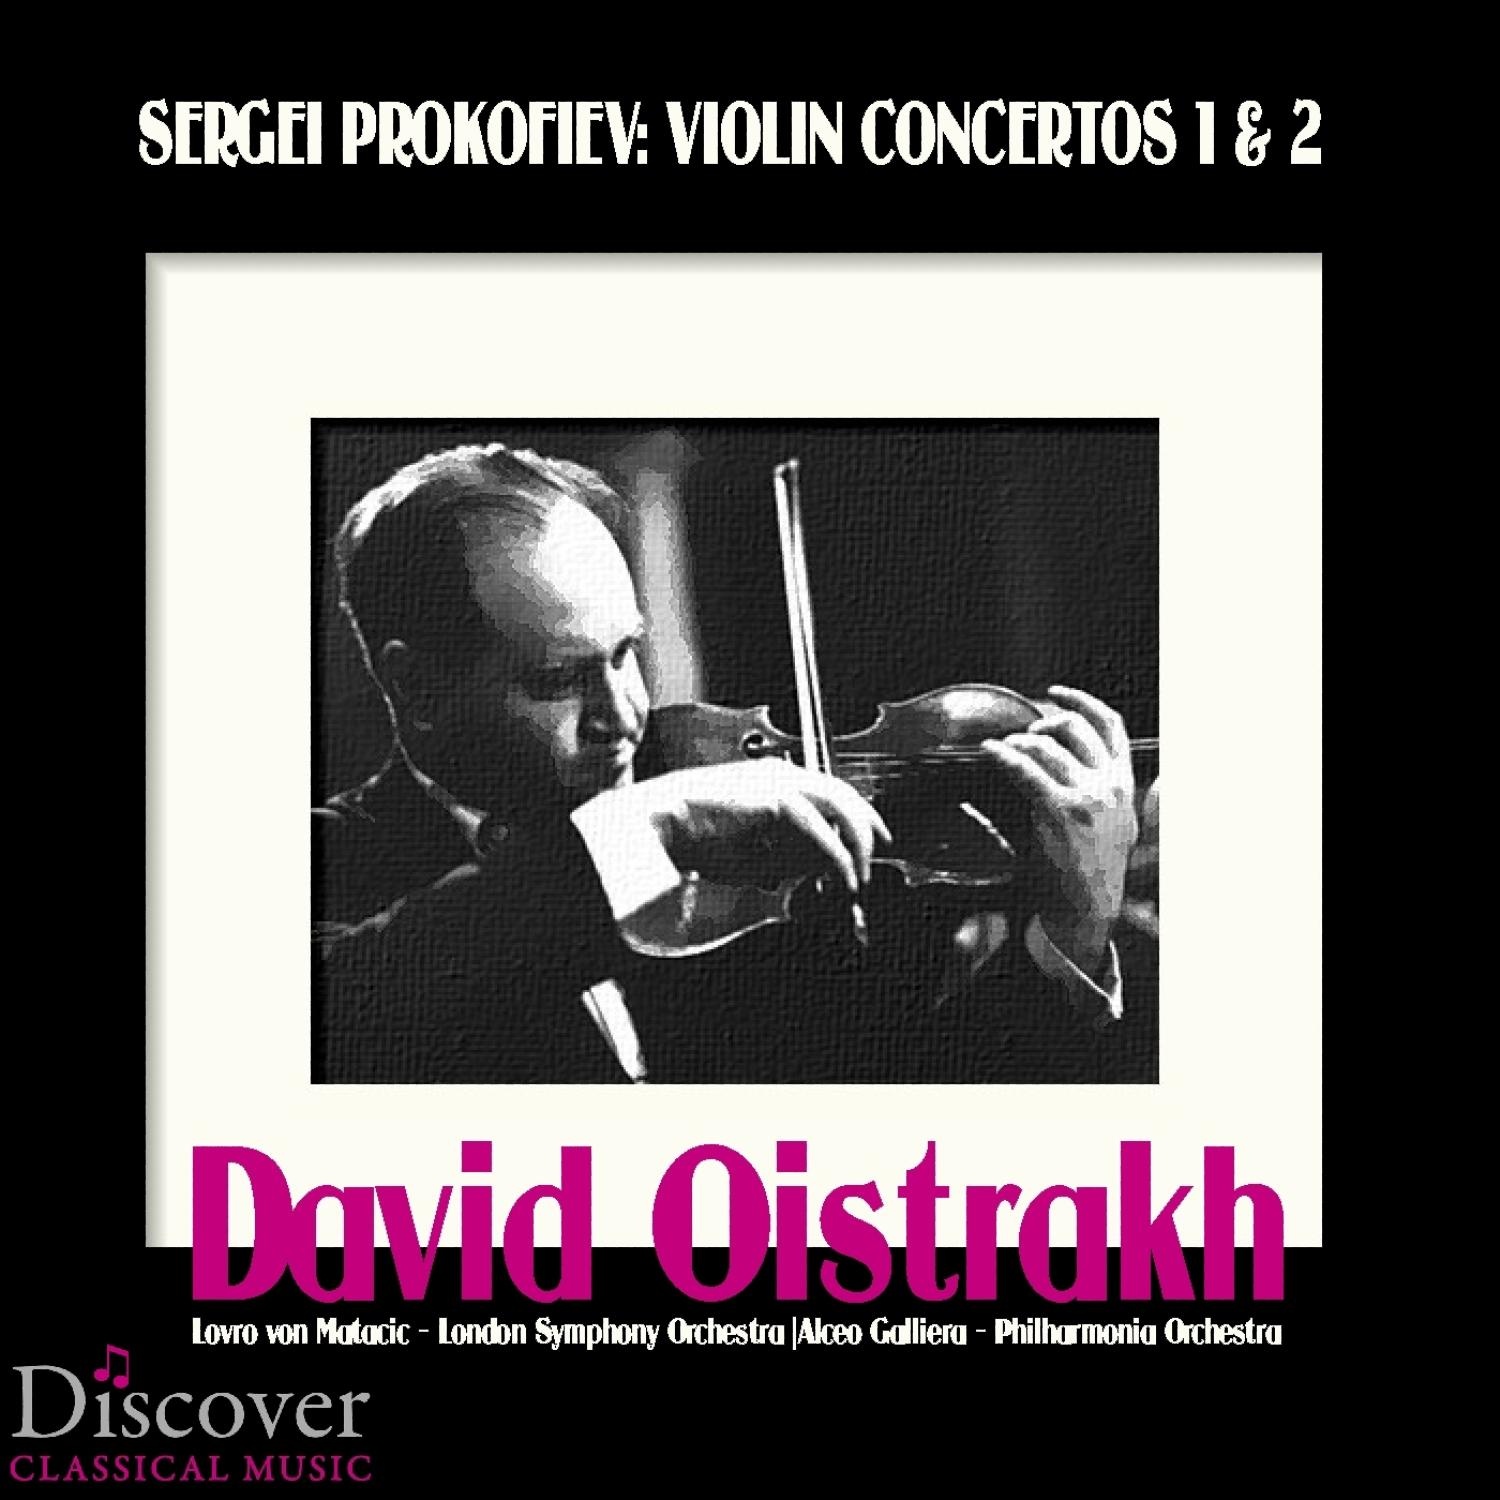 Violin Concerto No. 2, Op. 63: I. Allegro moderato